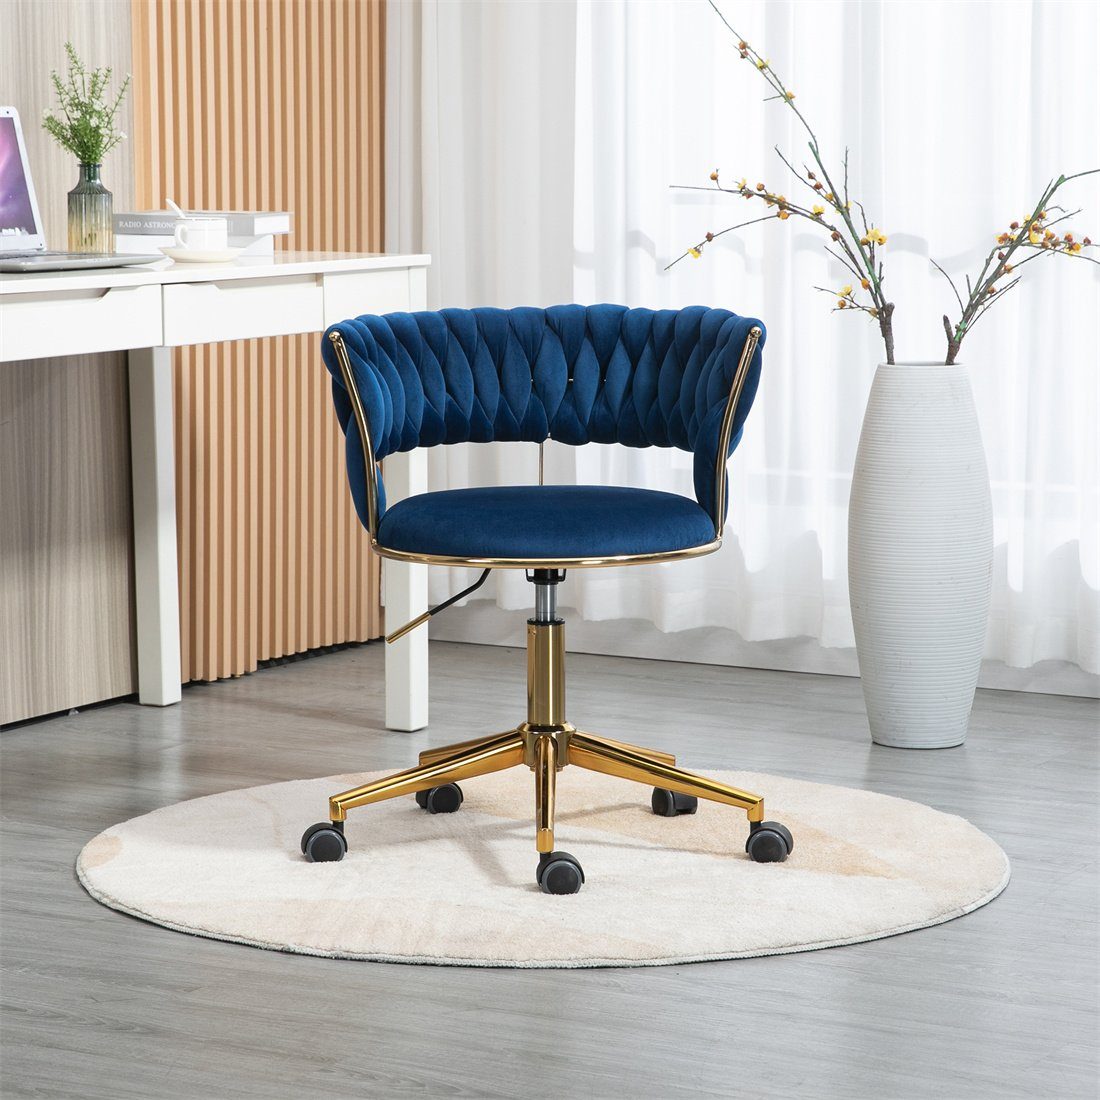 DÖRÖY Drehstuhl Home Office Chair,Kosmetikstuhl,Verstellbarer Computerstuhl,blau